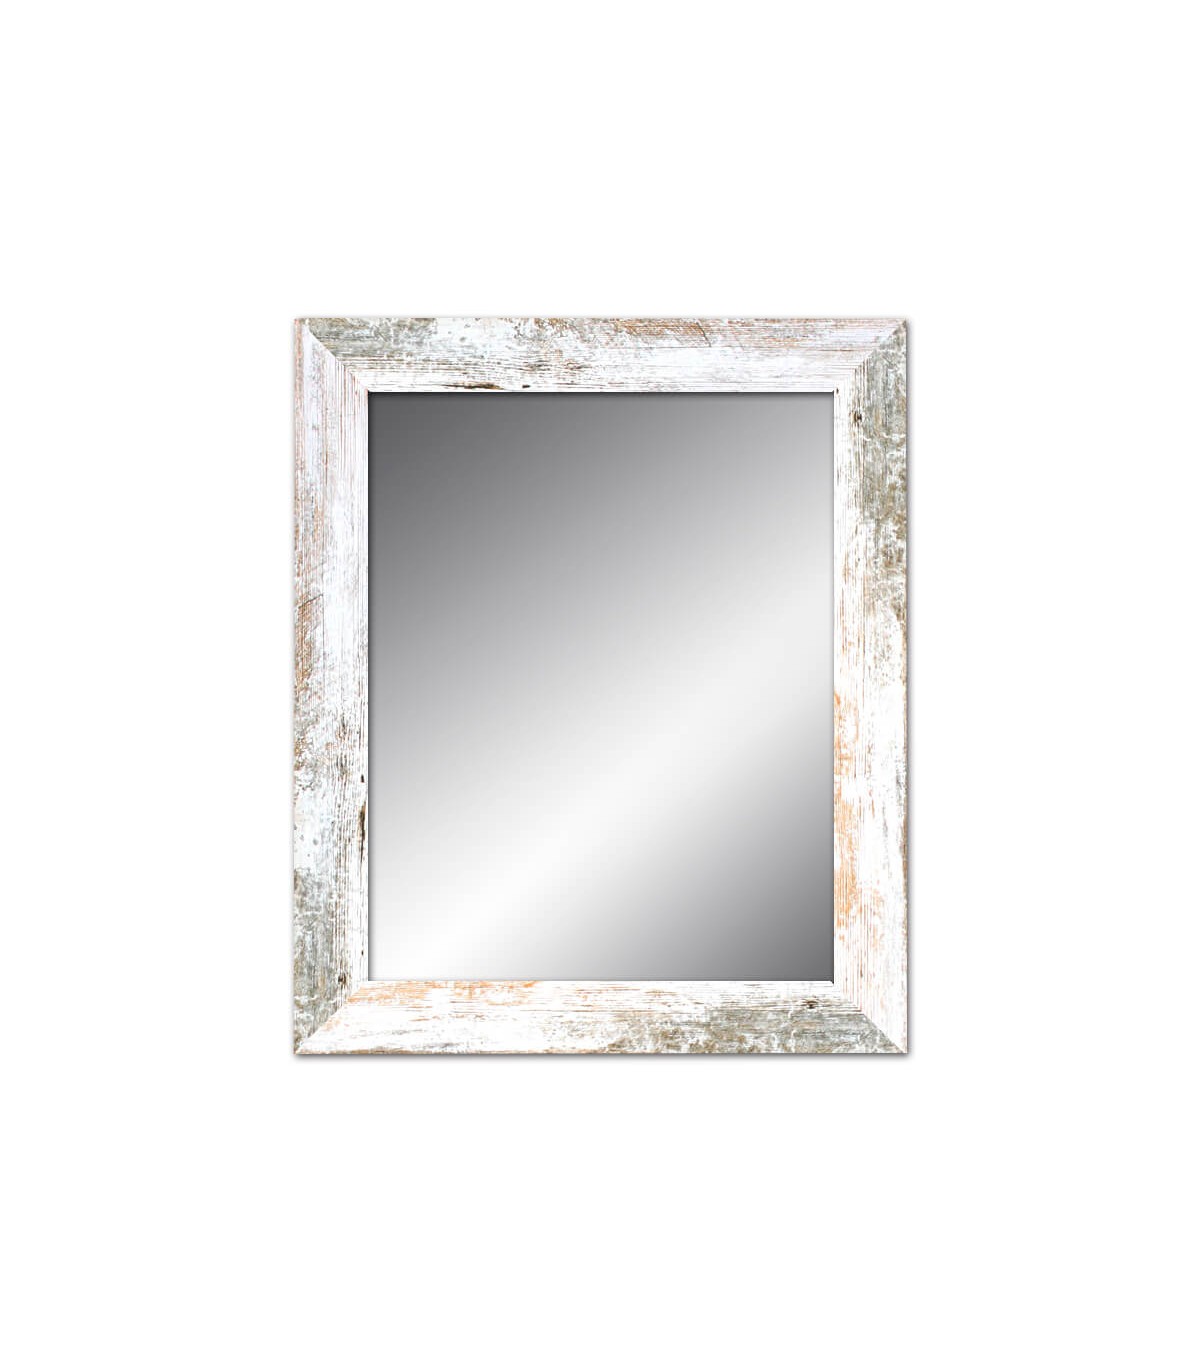 Espejo decorativo marco blanco vintage